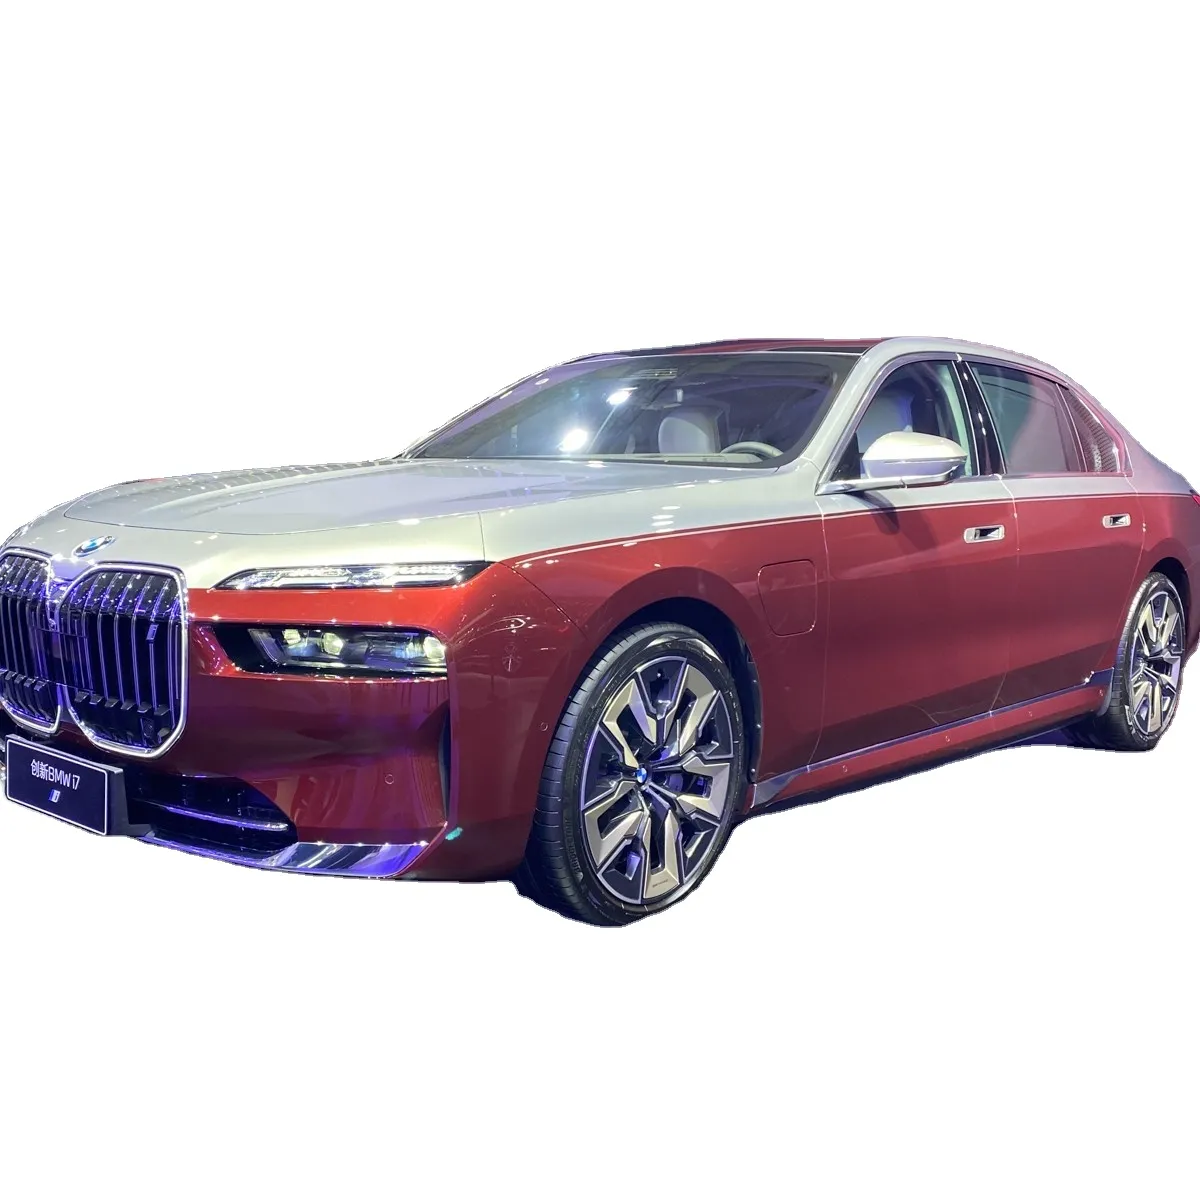 2023 cinese Luxury car discount 4 FourBaoma i7 Wheel New Energy EV veicoli elettrici per adulti auto elettriche